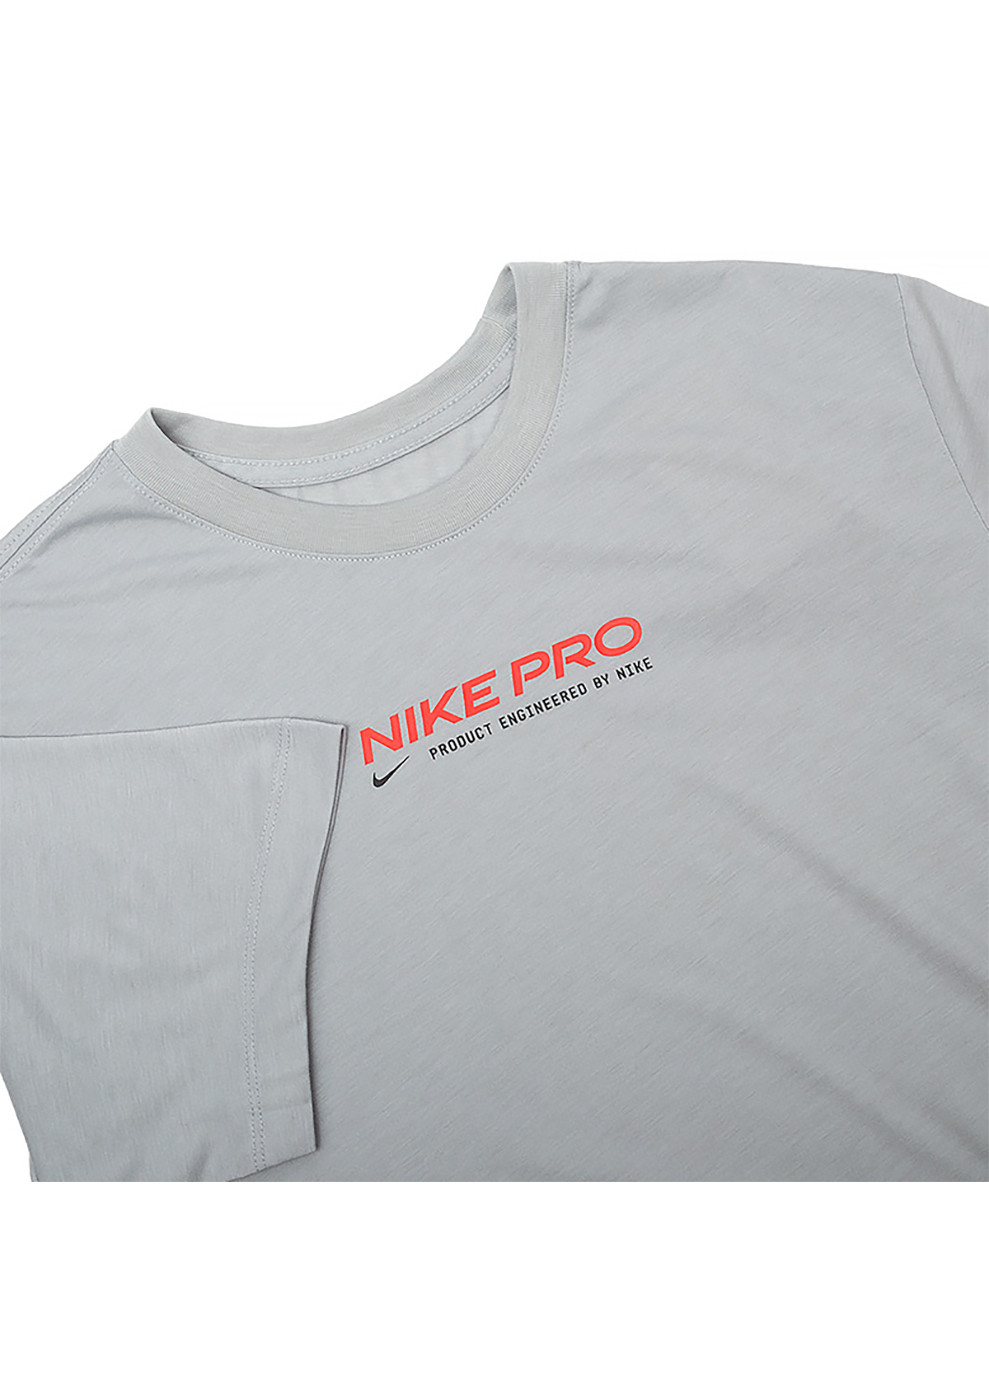 Серая мужская футболка m nk df tee db nk pro 2 серый xl (dm5677-077 xl) Nike